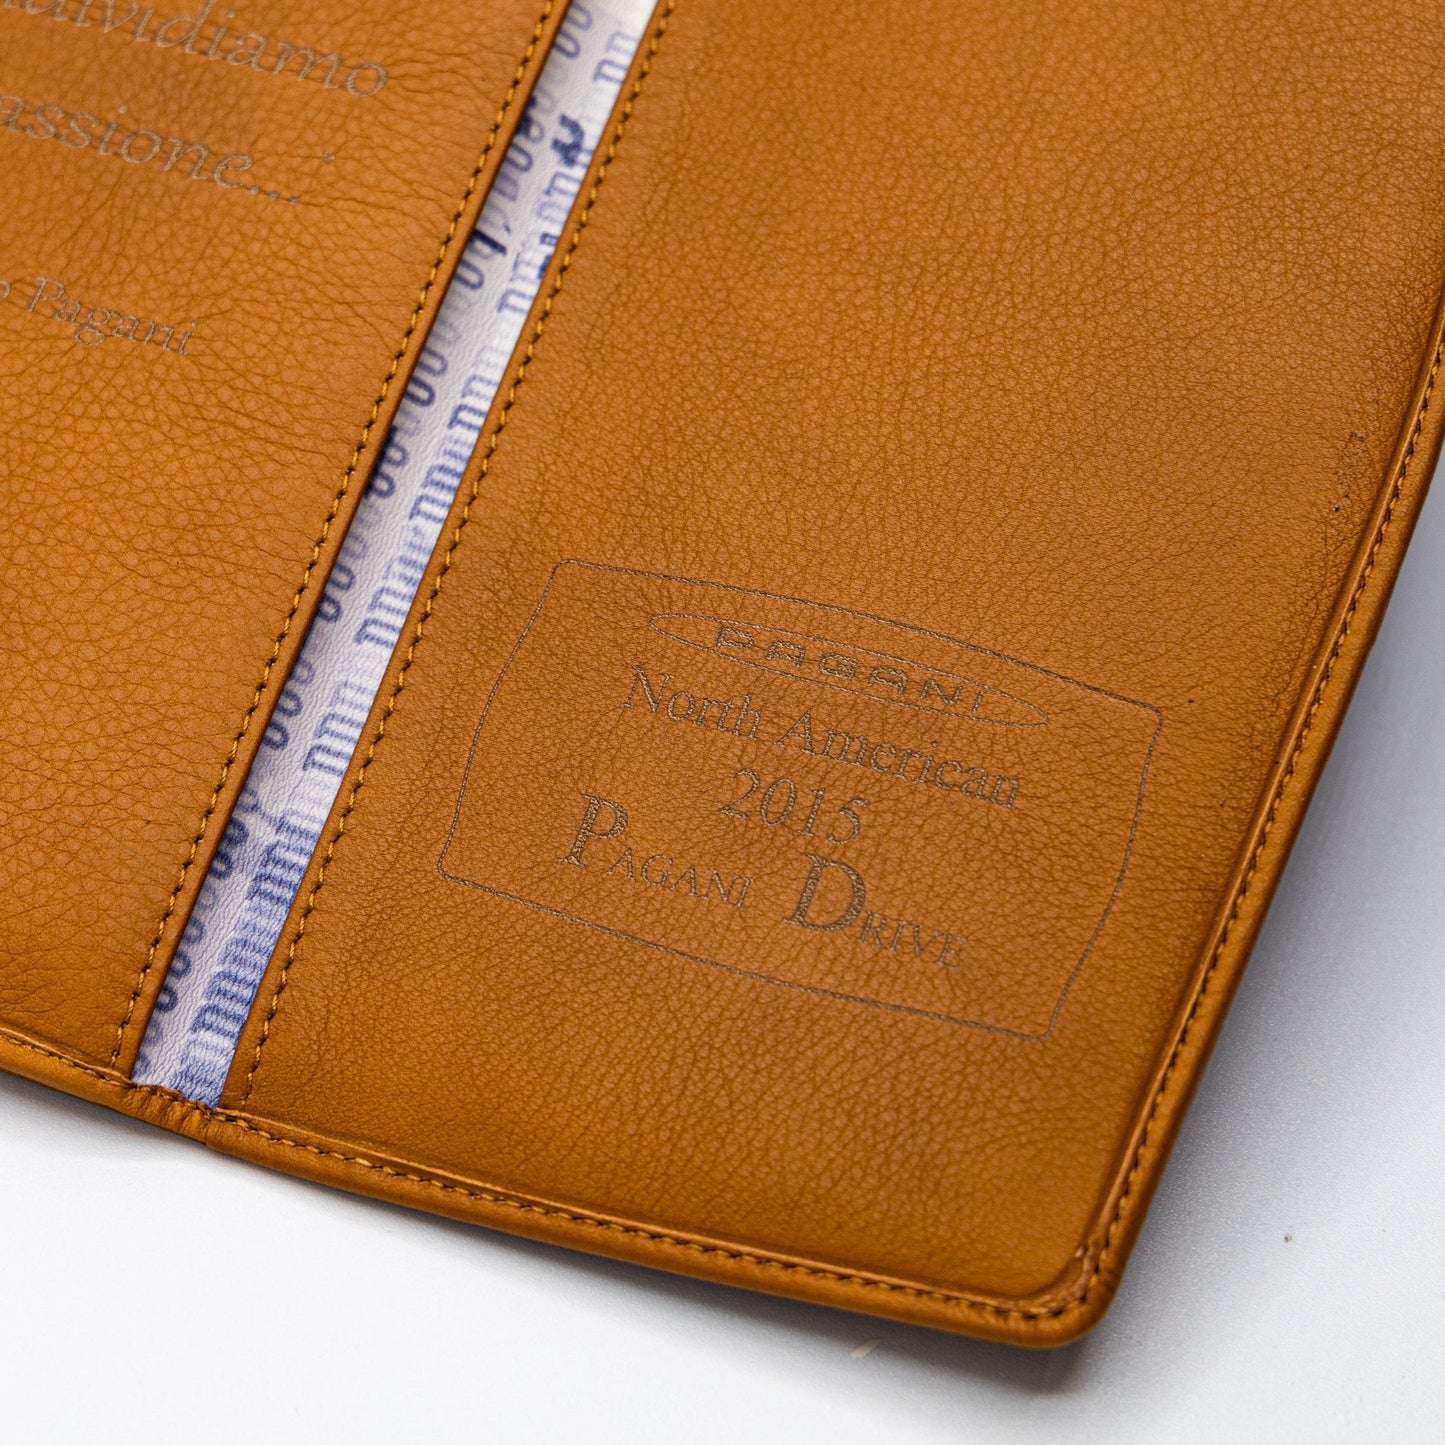 Pagani Automobili Leather Document Holder